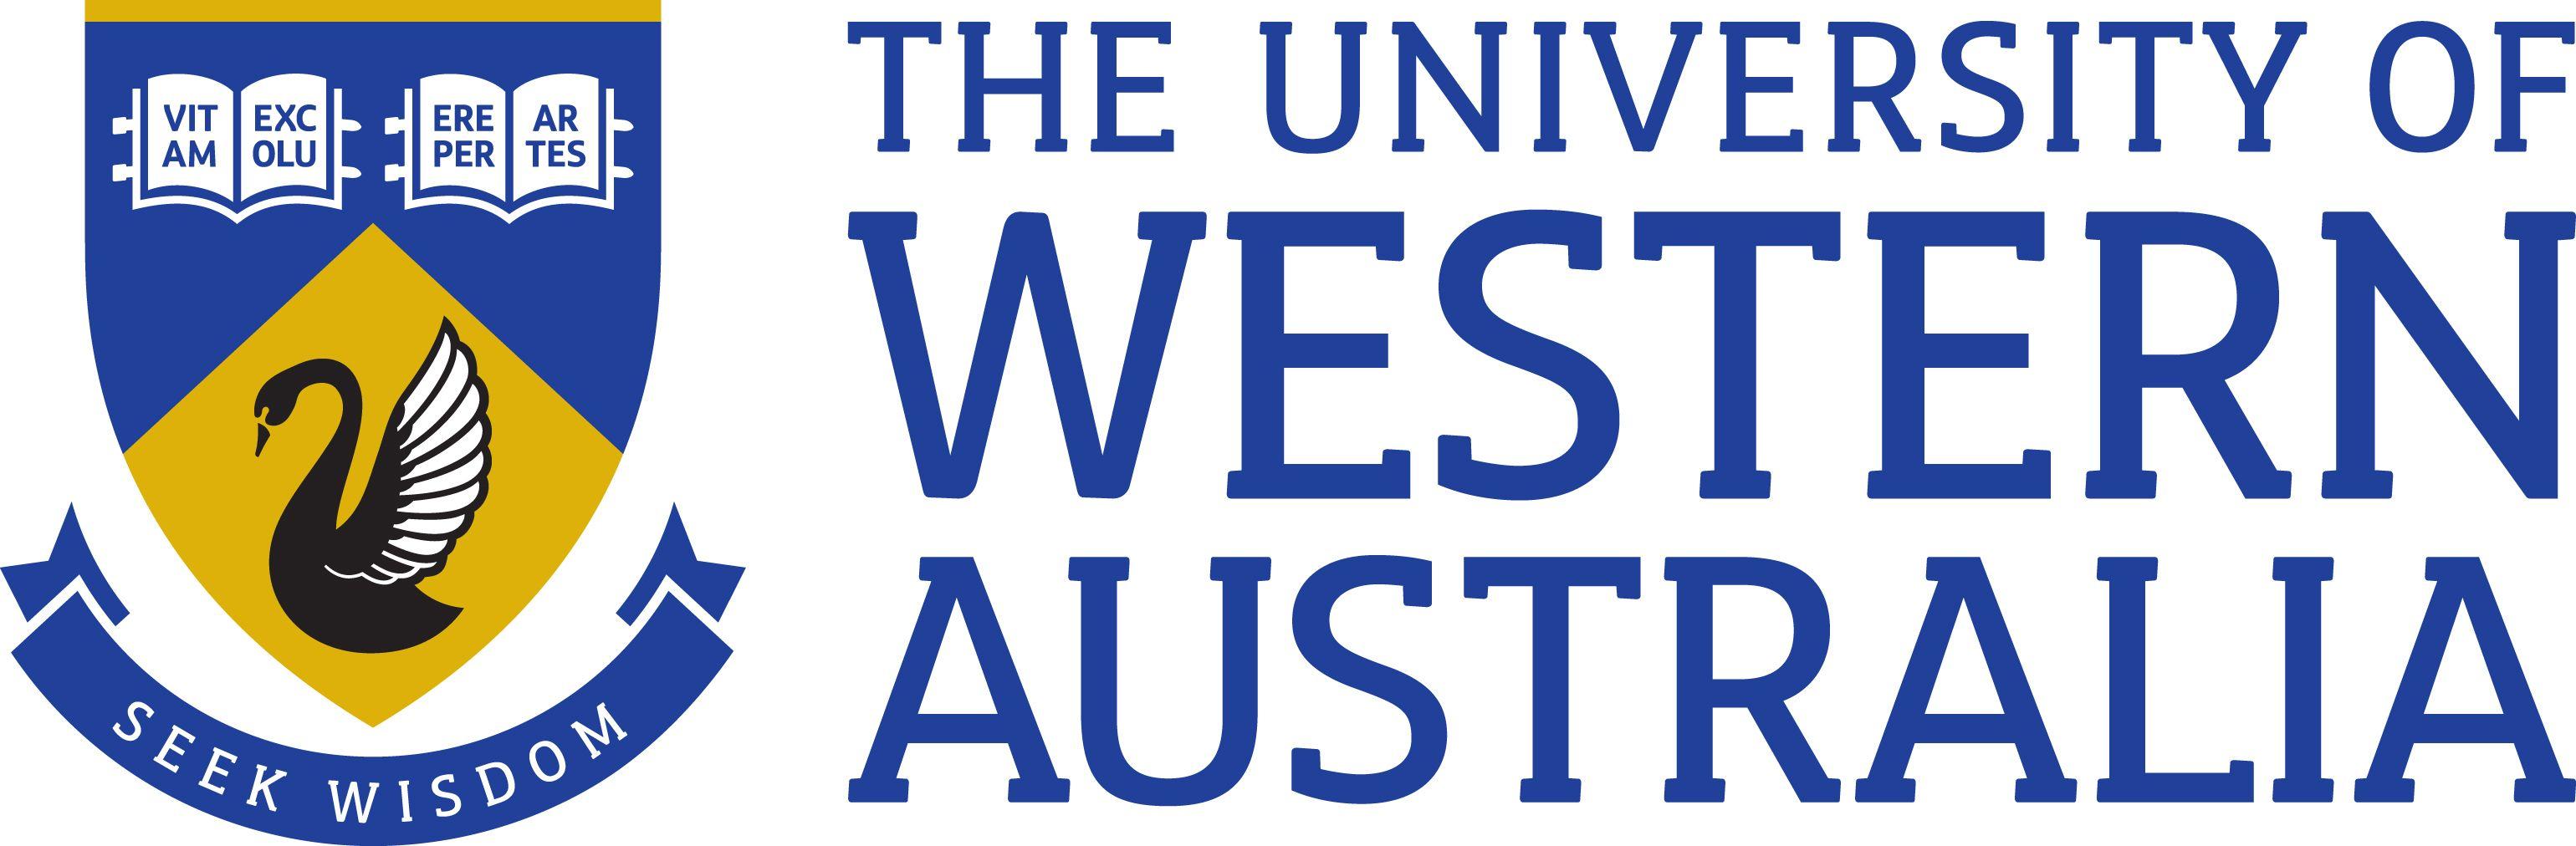 University of WA Logo - The University of Western Australia - Universities Australia